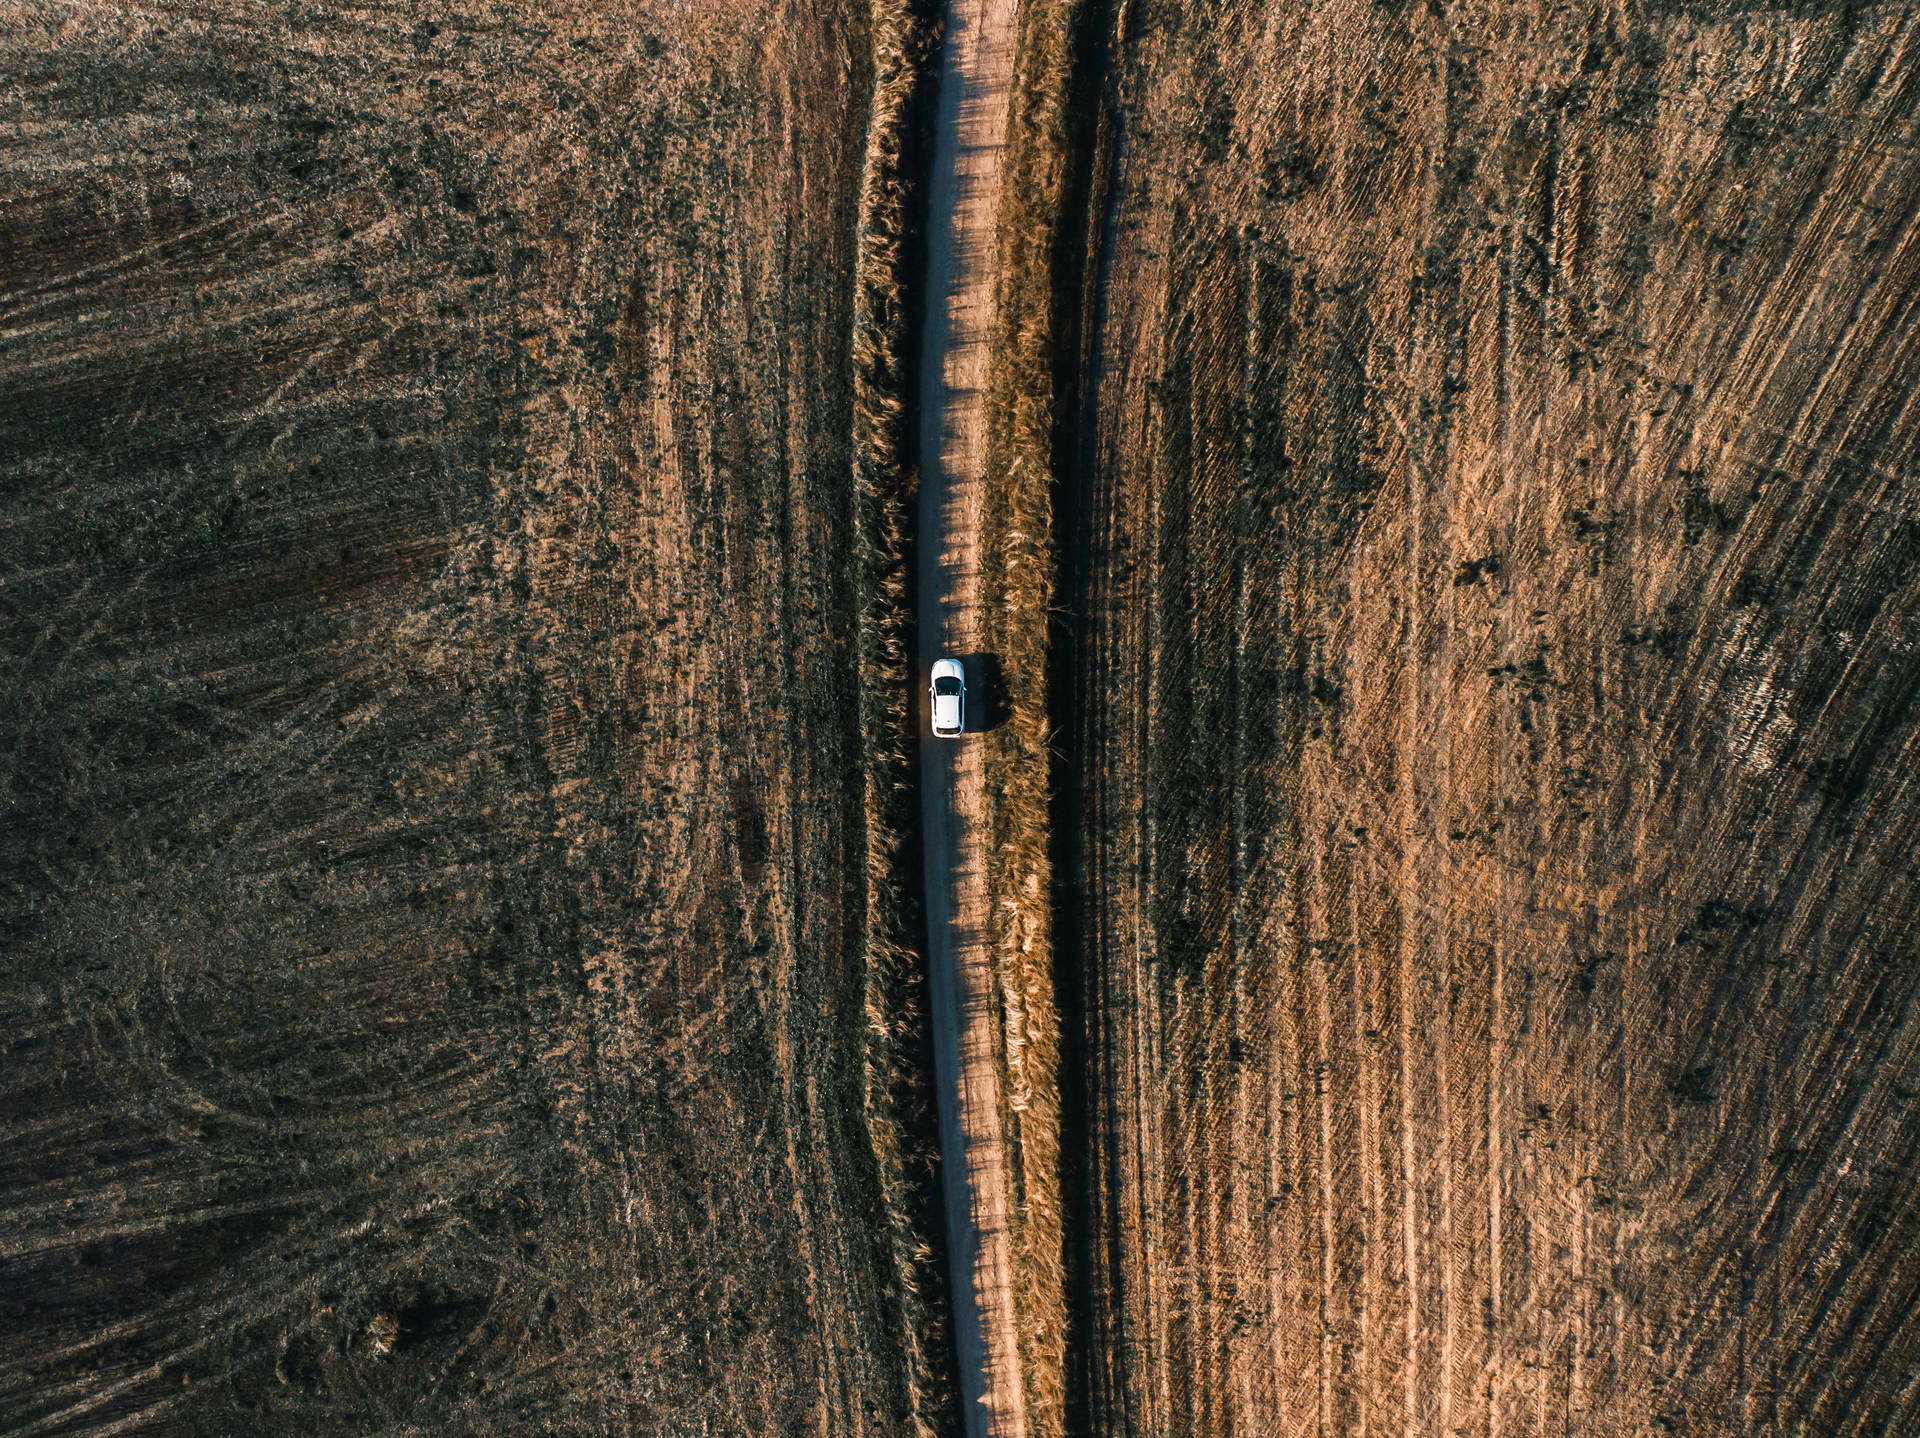 Hd Car On Dirt Aerial View